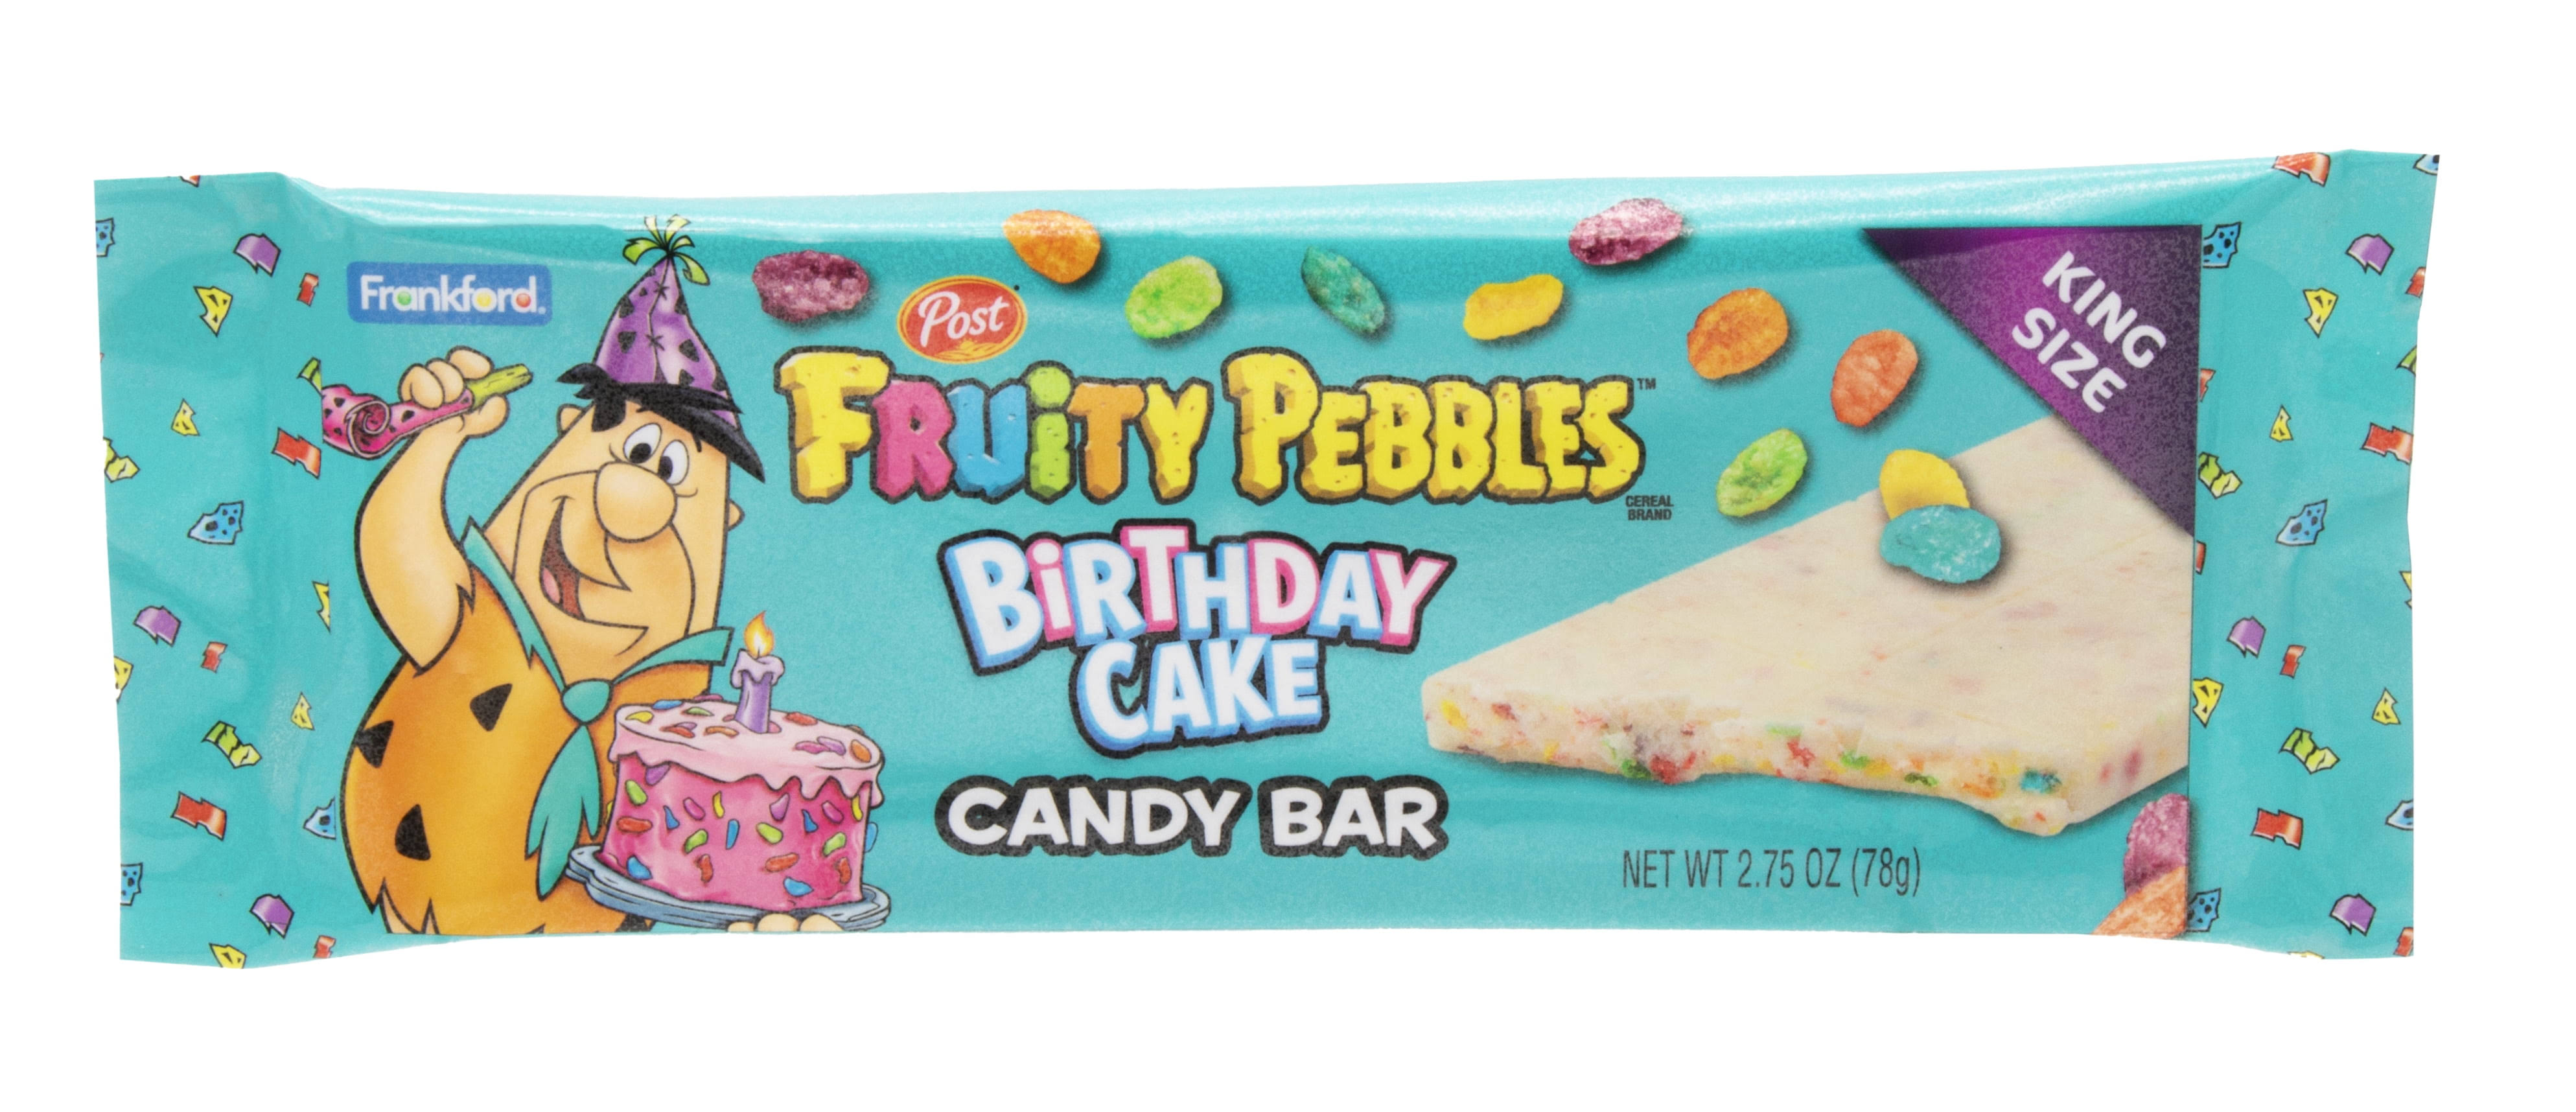 Fruity Pebbles Birthday Cake Candy Bar - 78g